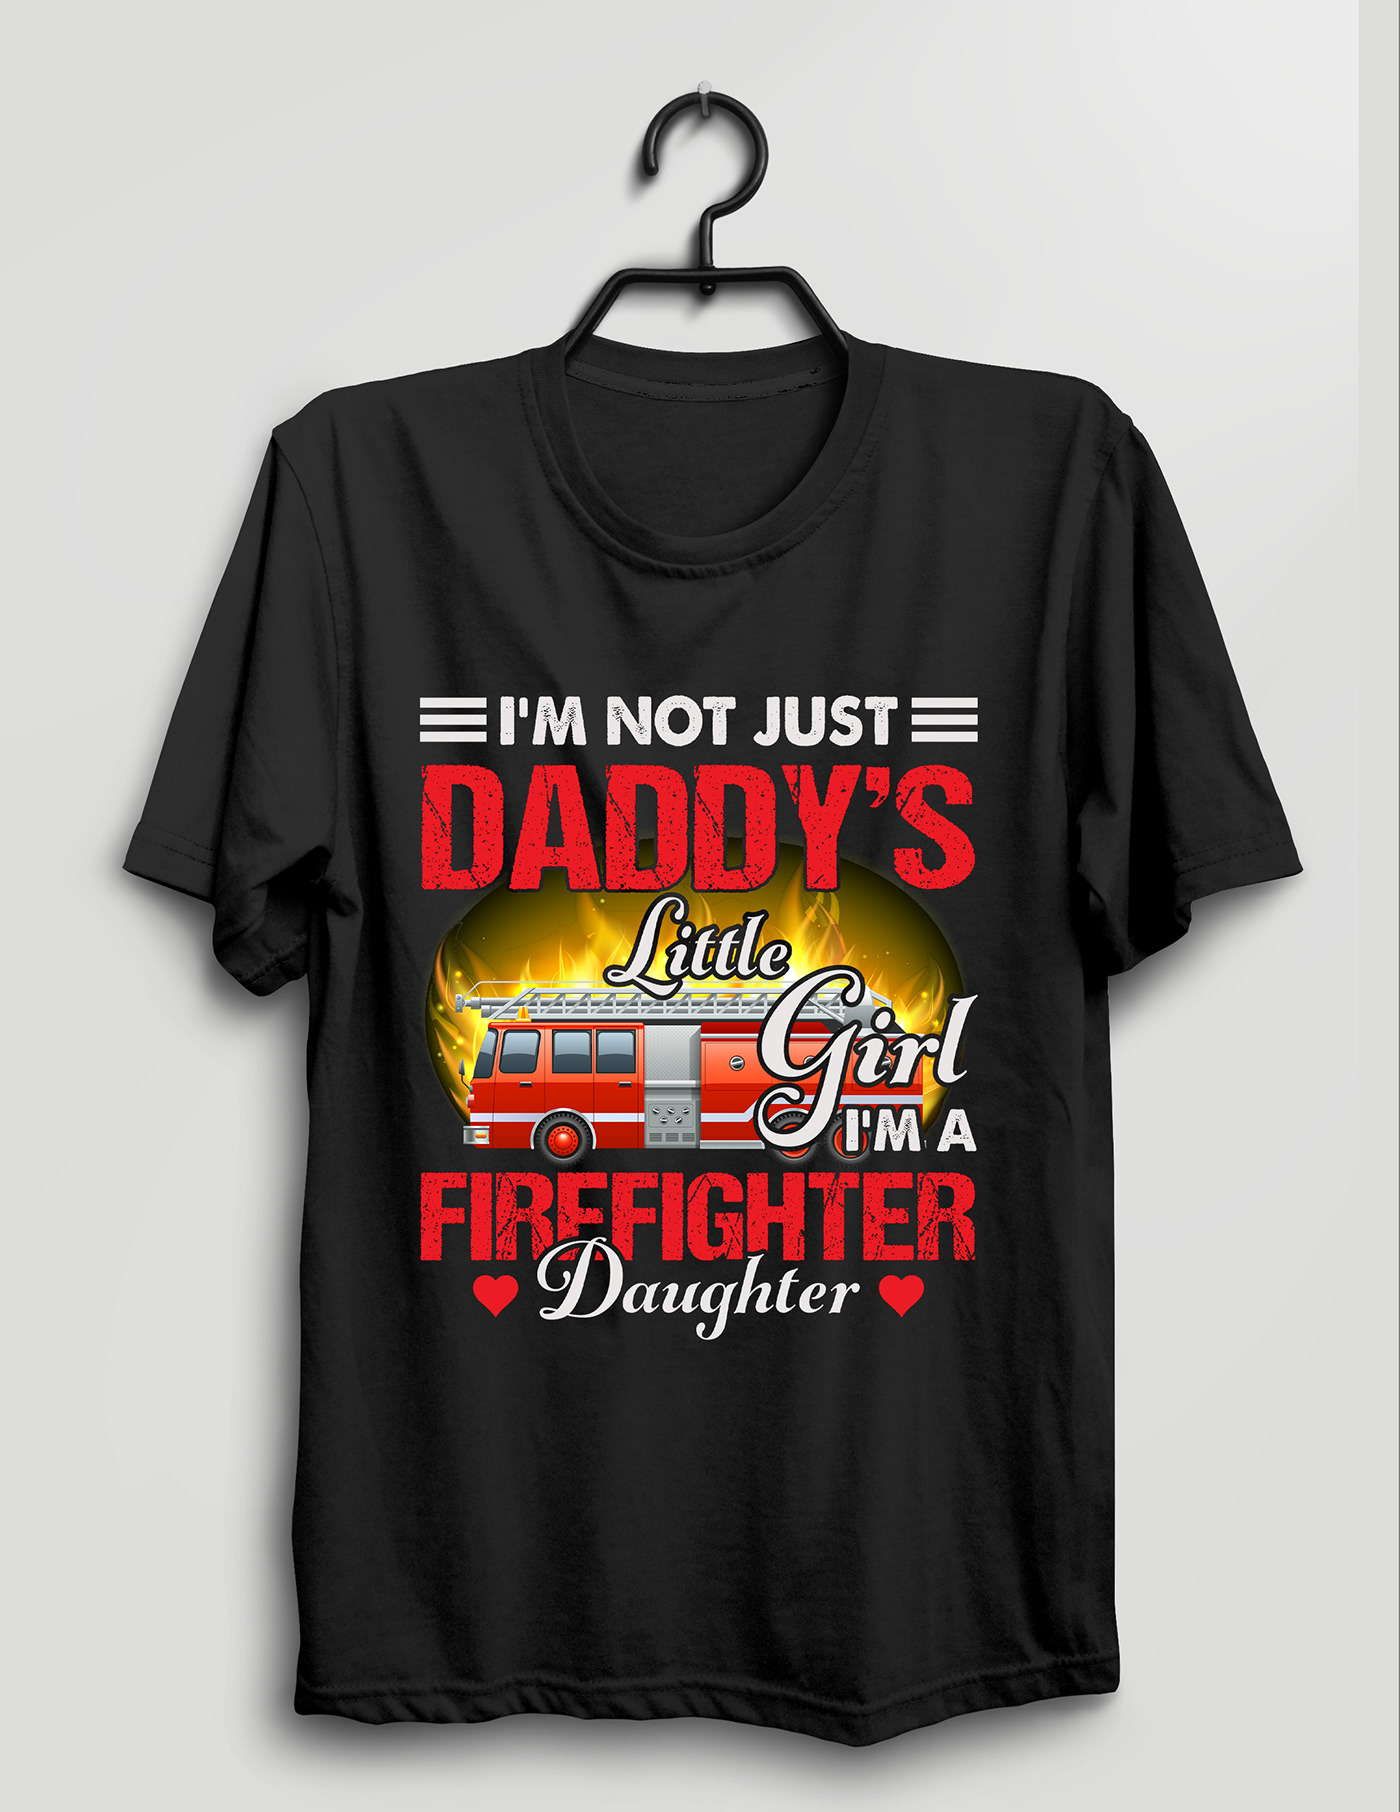 Firefighter firefighters idea fire tshirt Tshirt Design firefighter t shirt tshirts Firefighter T-Shirt firefighter tshirt